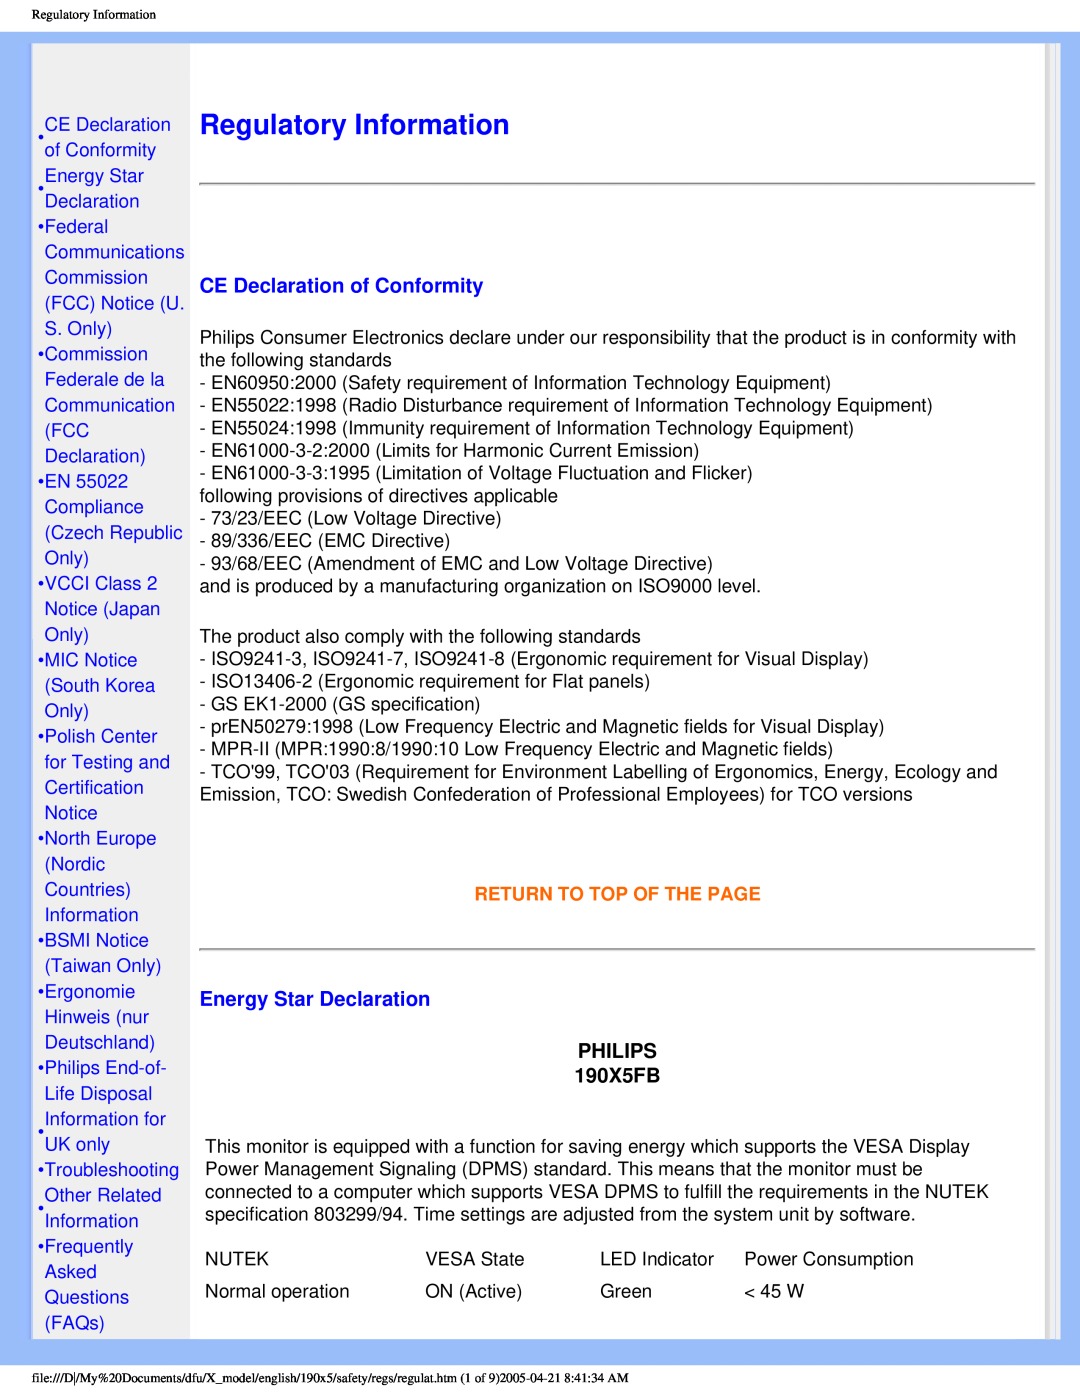 Philips user manual Regulatory Information, CE Declaration of Conformity, Energy Star Declaration, PHILIPS 190X5FB 